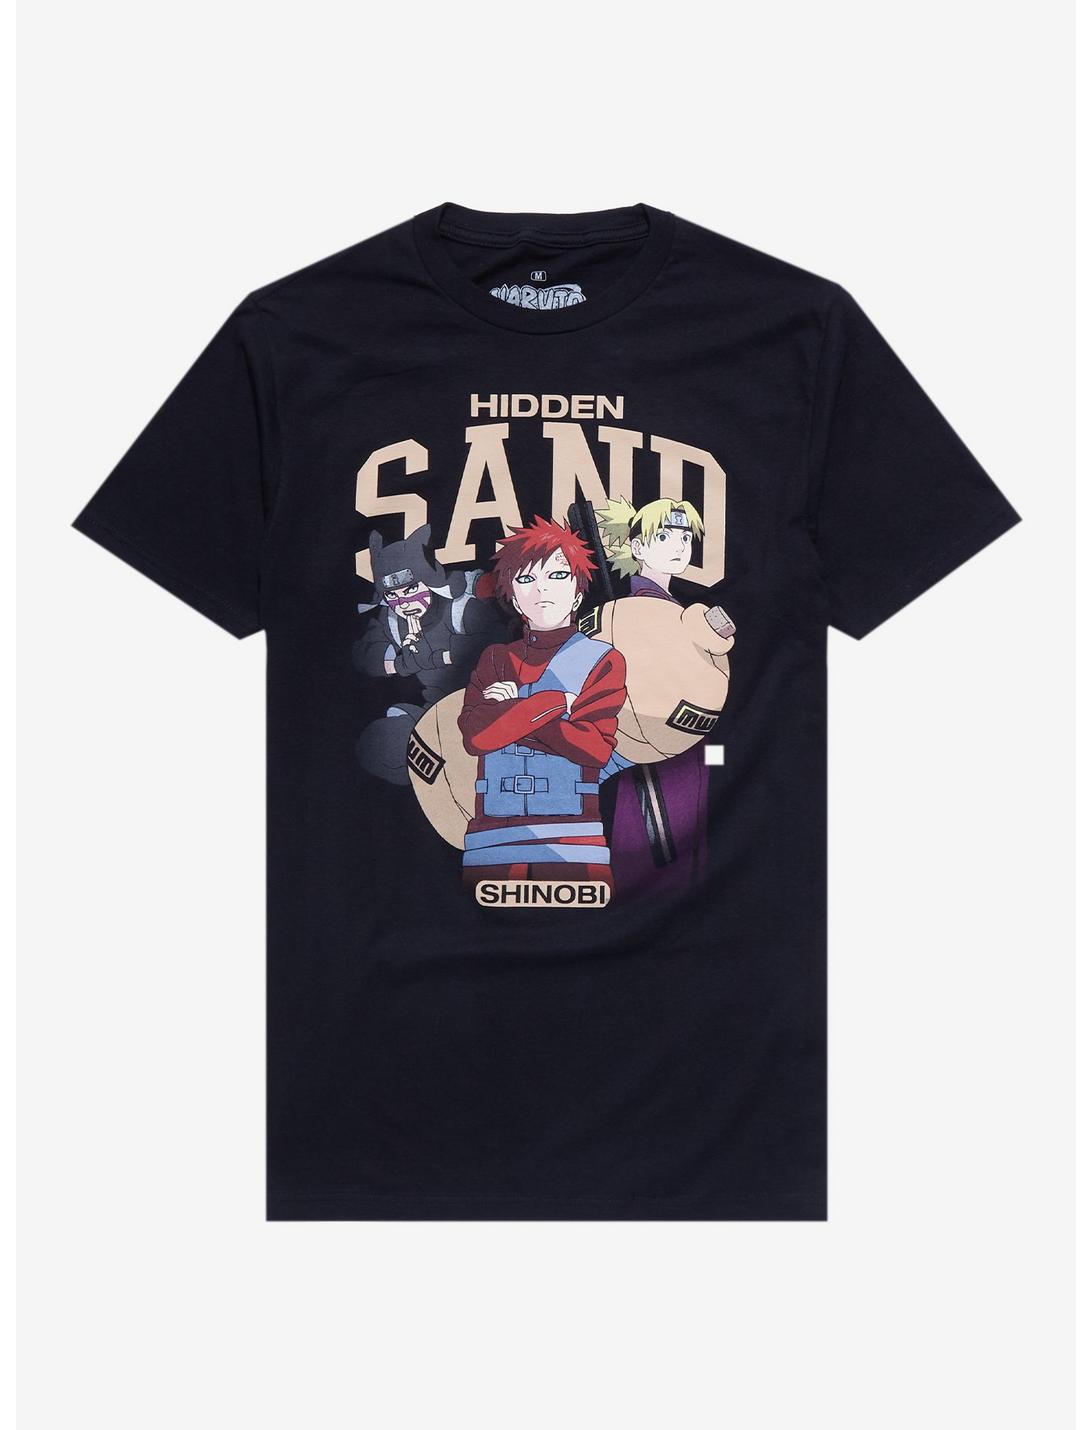 Naruto Shippuden Hidden Sand Trio T-Shirt, BLACK, hi-res